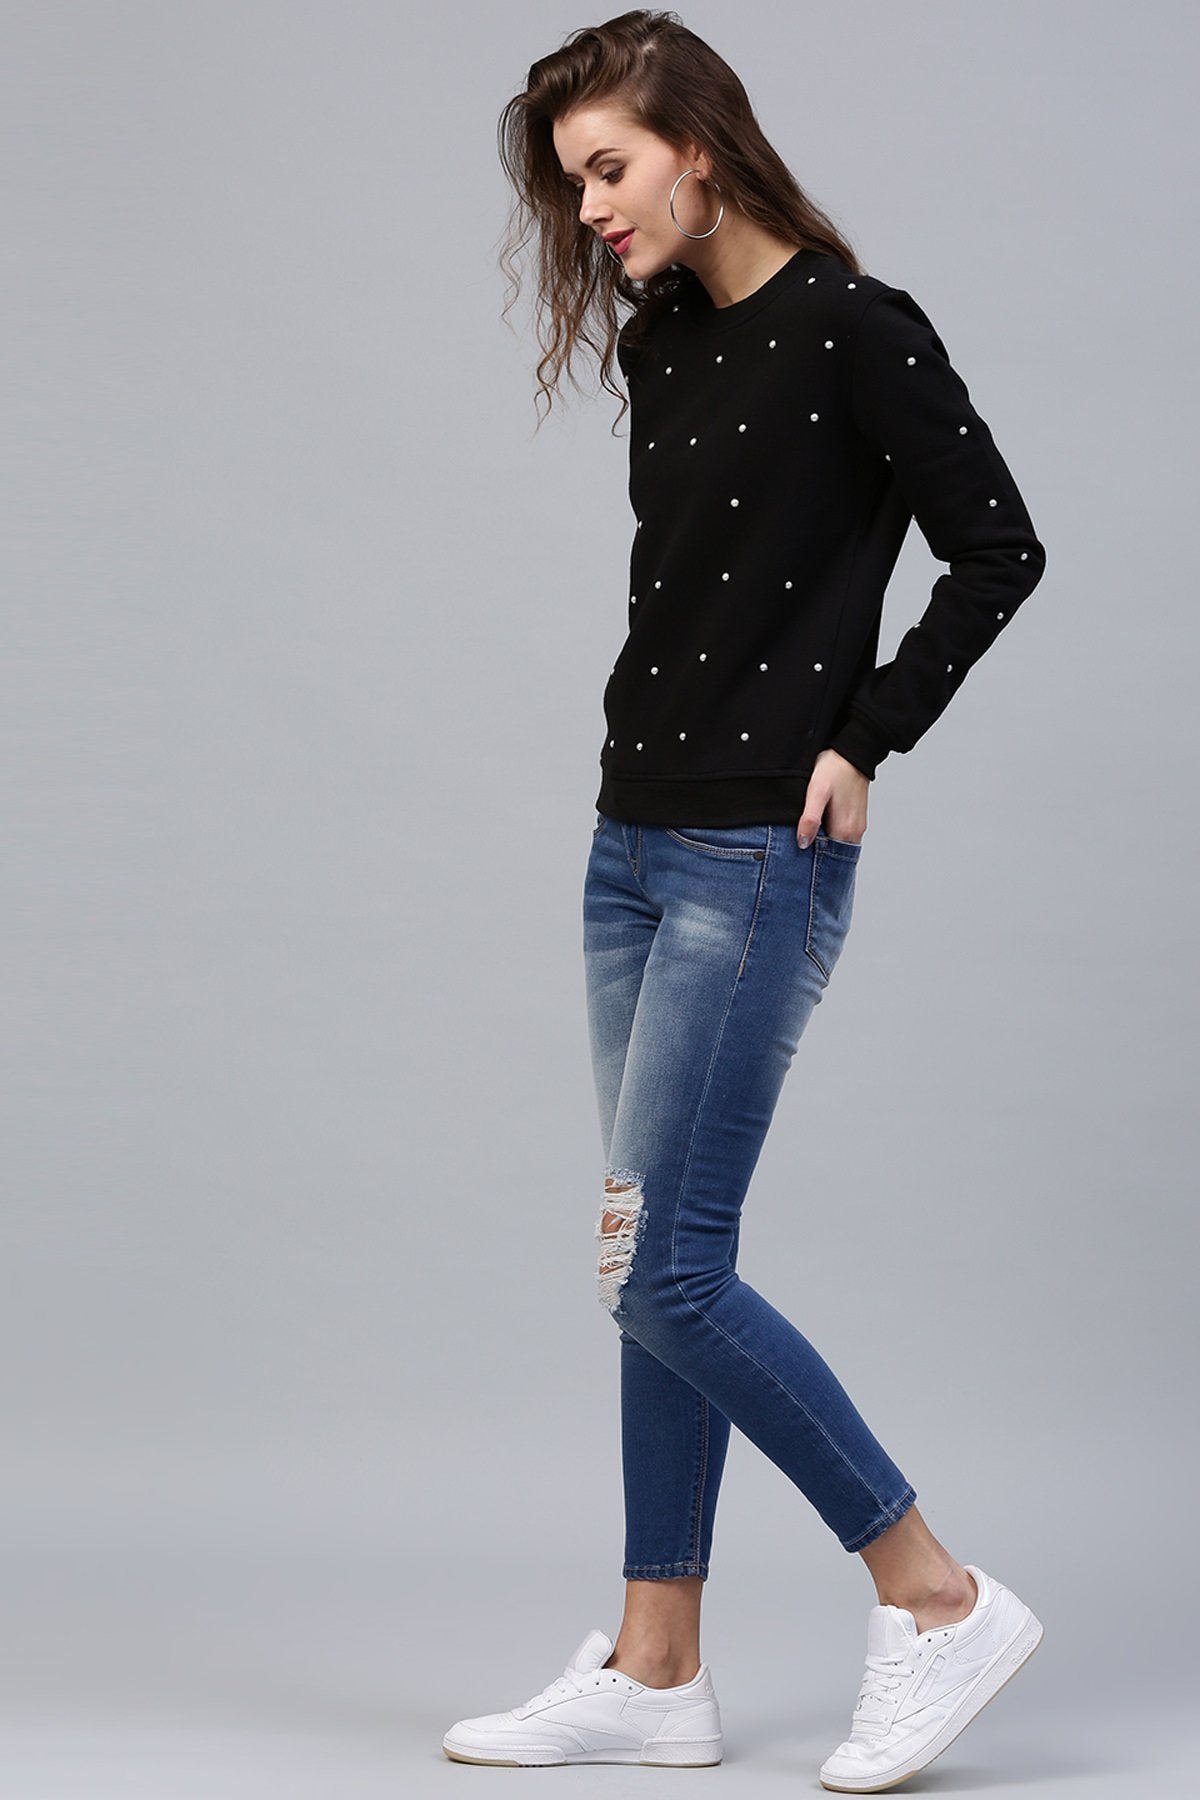 Women's Pearl Beaded Black Sweatshirt - SASSAFRAS